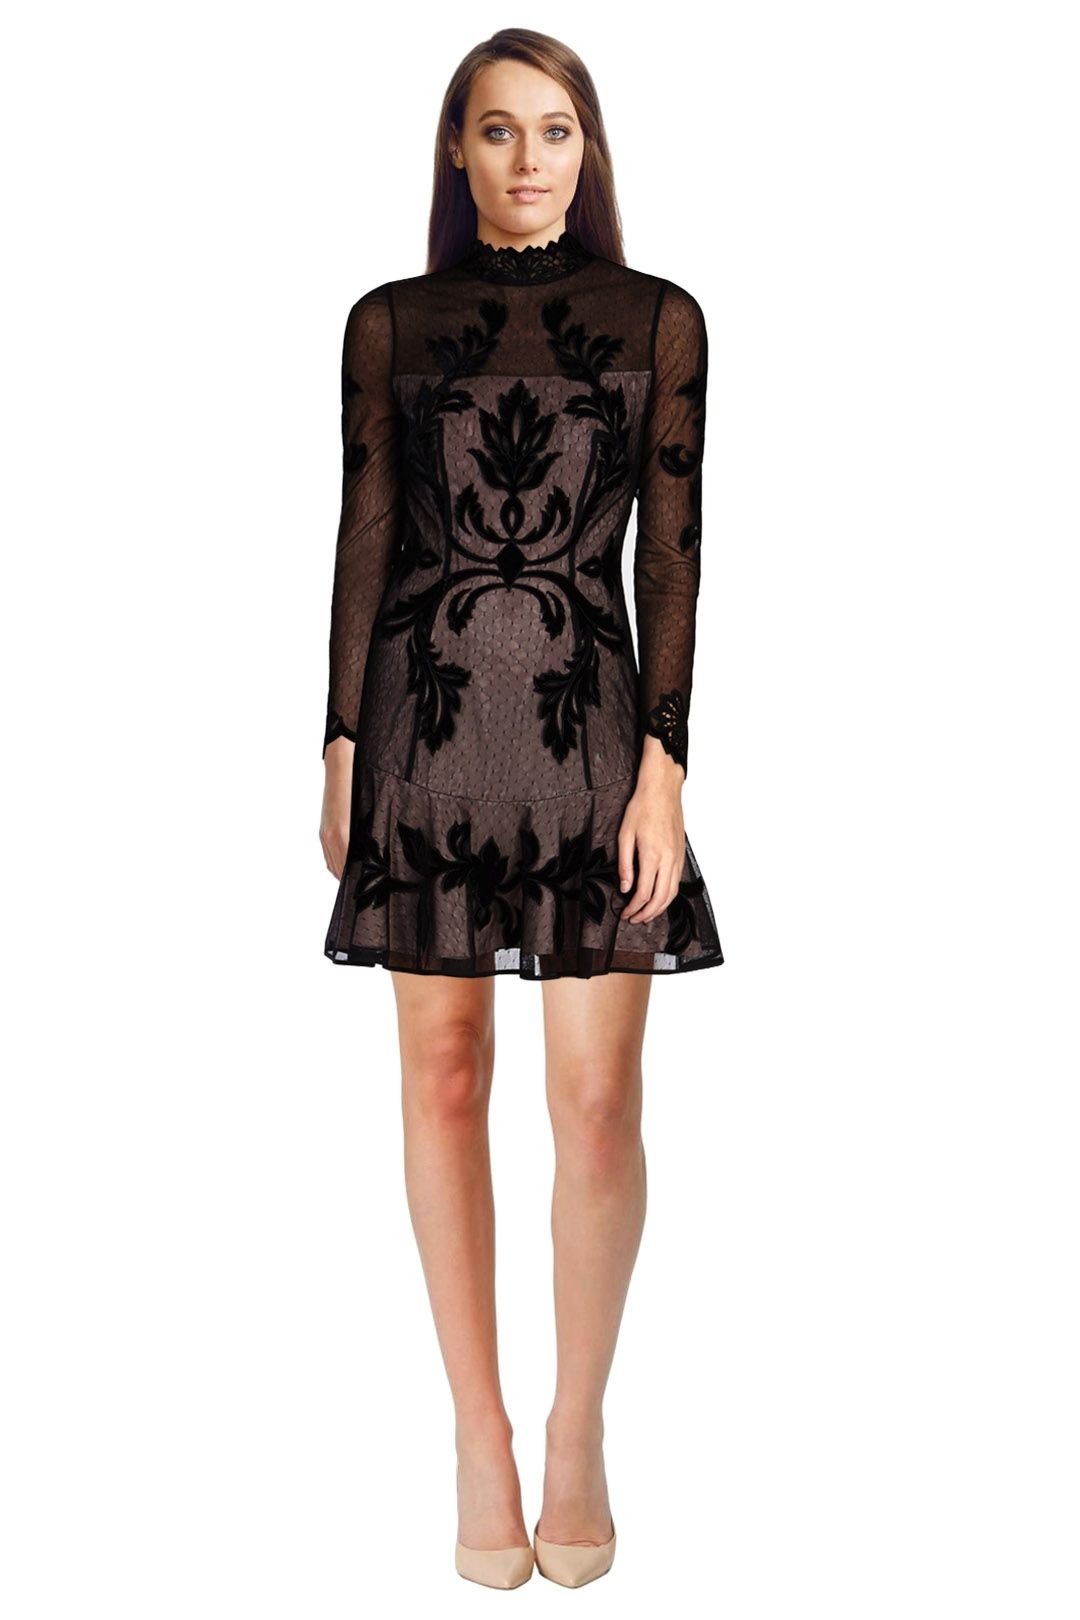 Karen Millen - Embroidered High-Neck Mini Dress - Black - Front